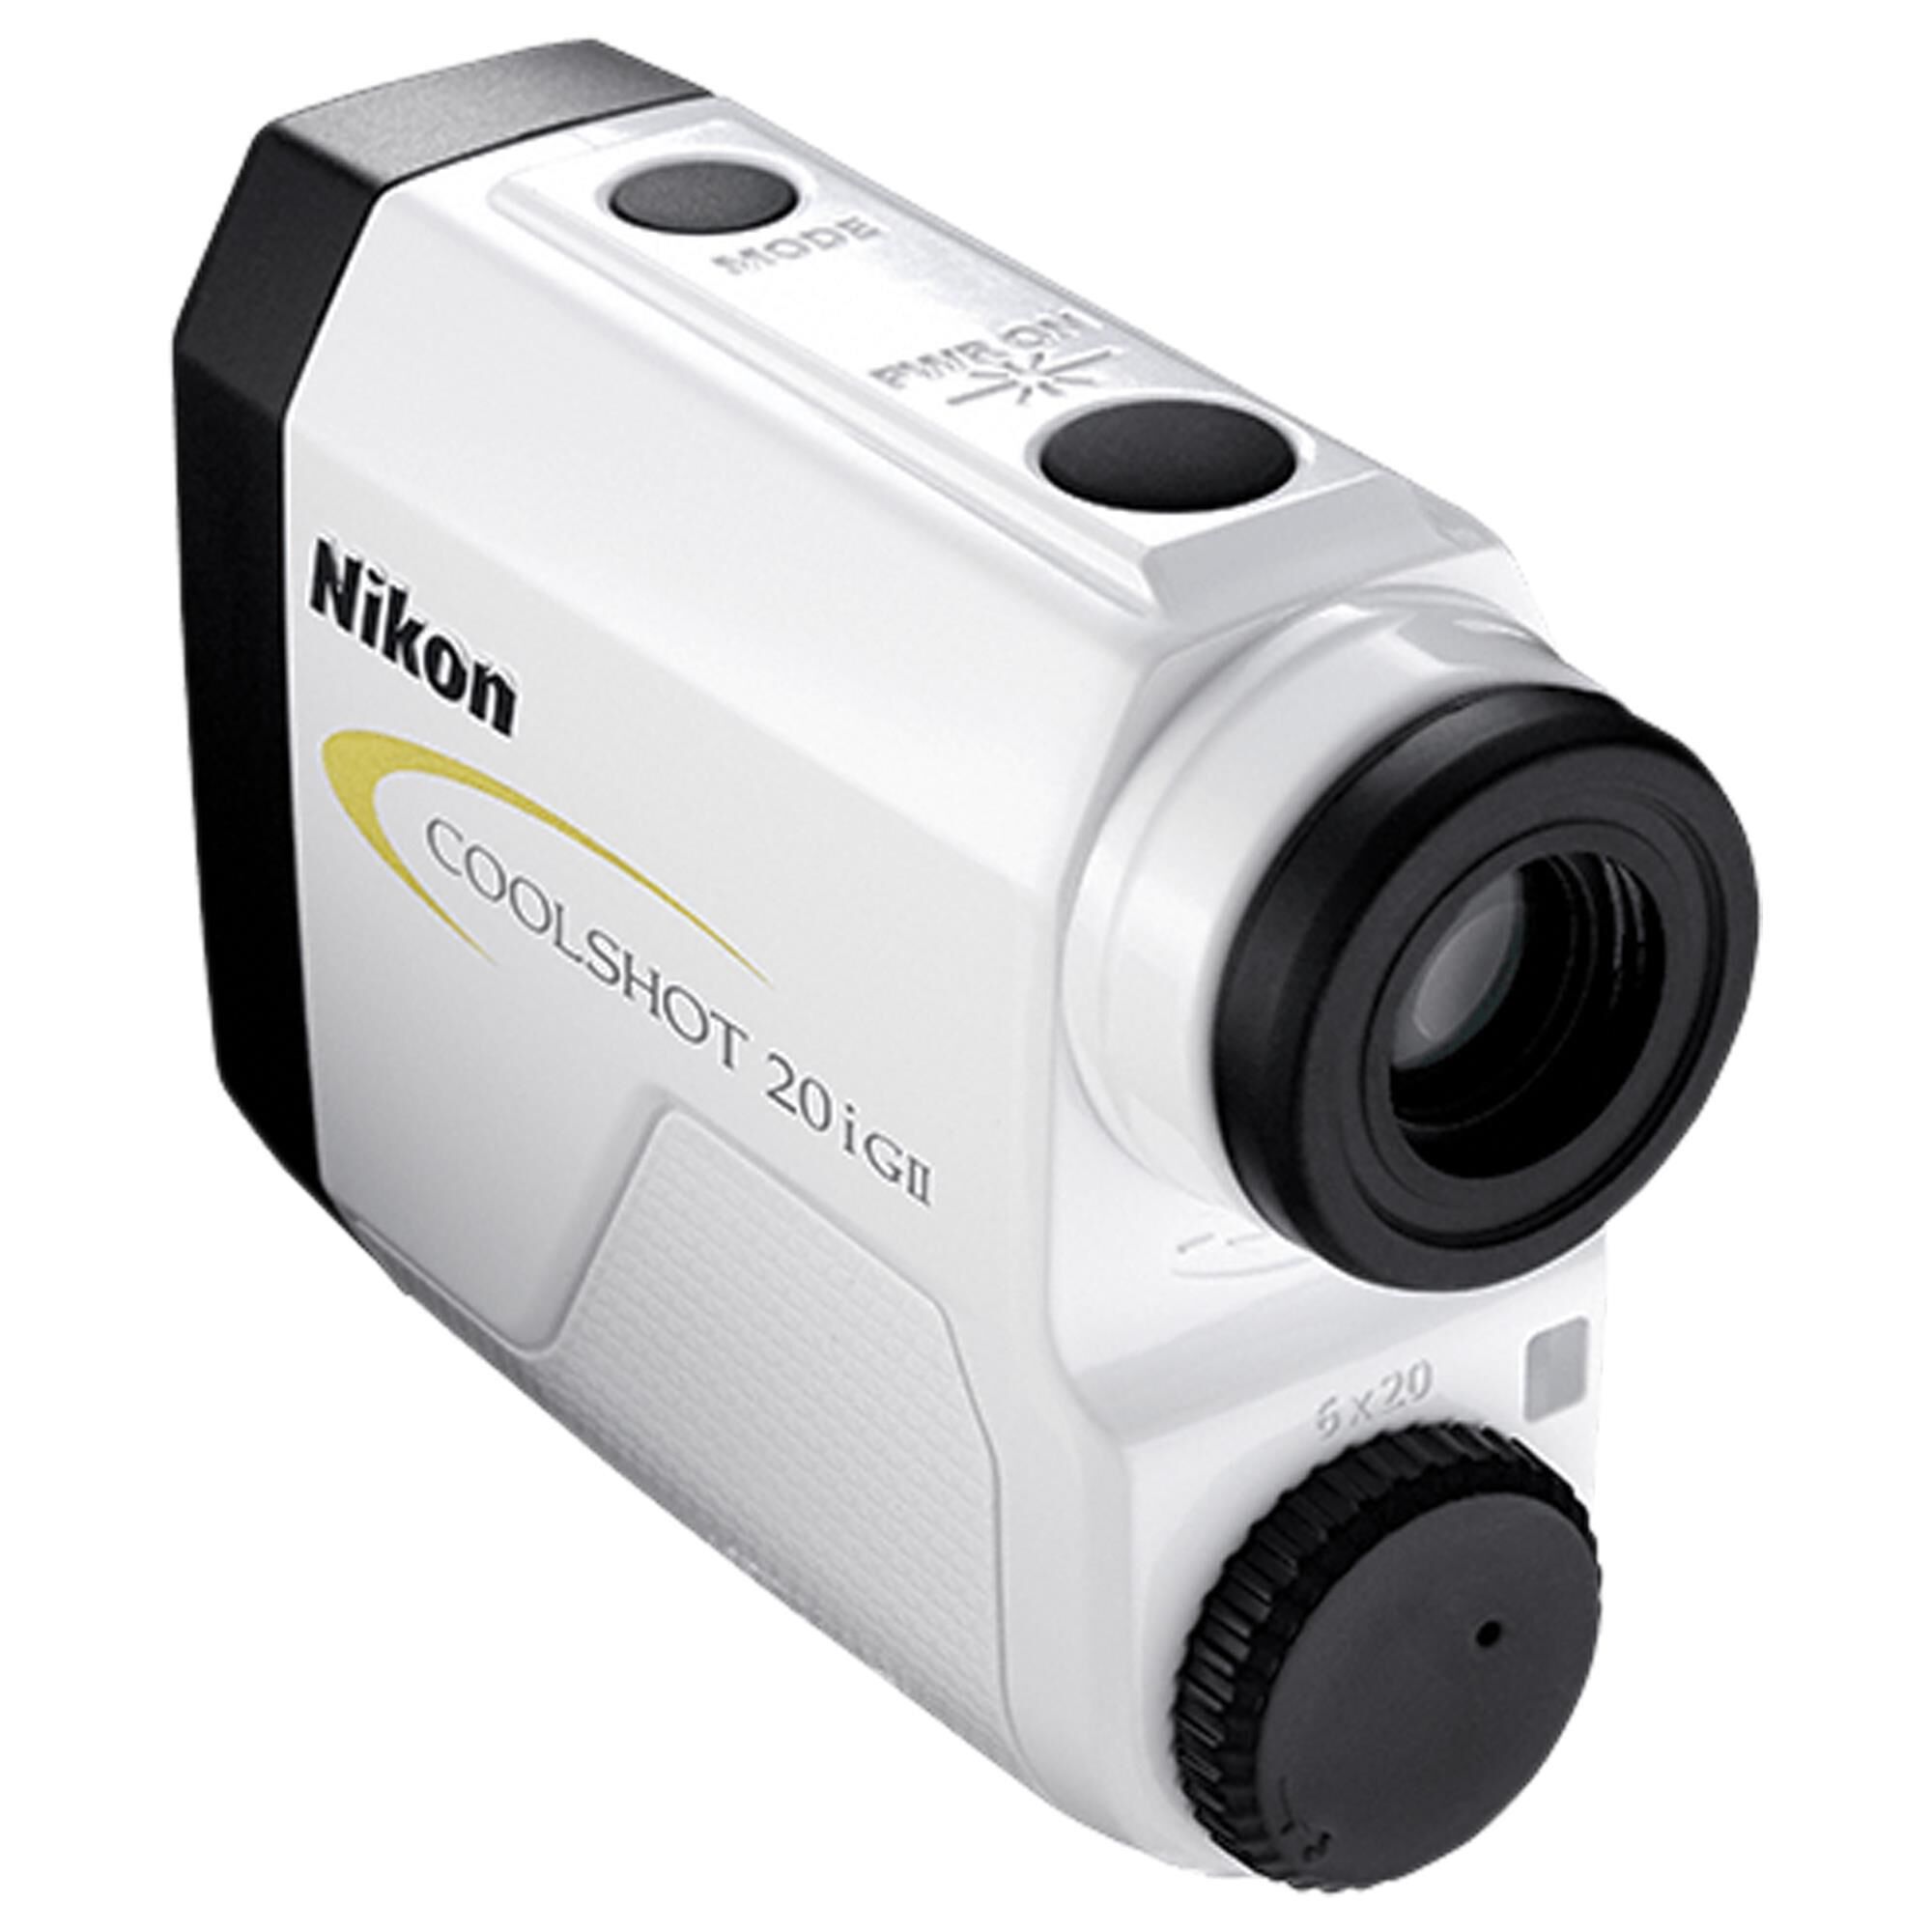 Nikon CoolShot 20i GII Golf Laser Rangefinder in White and Yellow